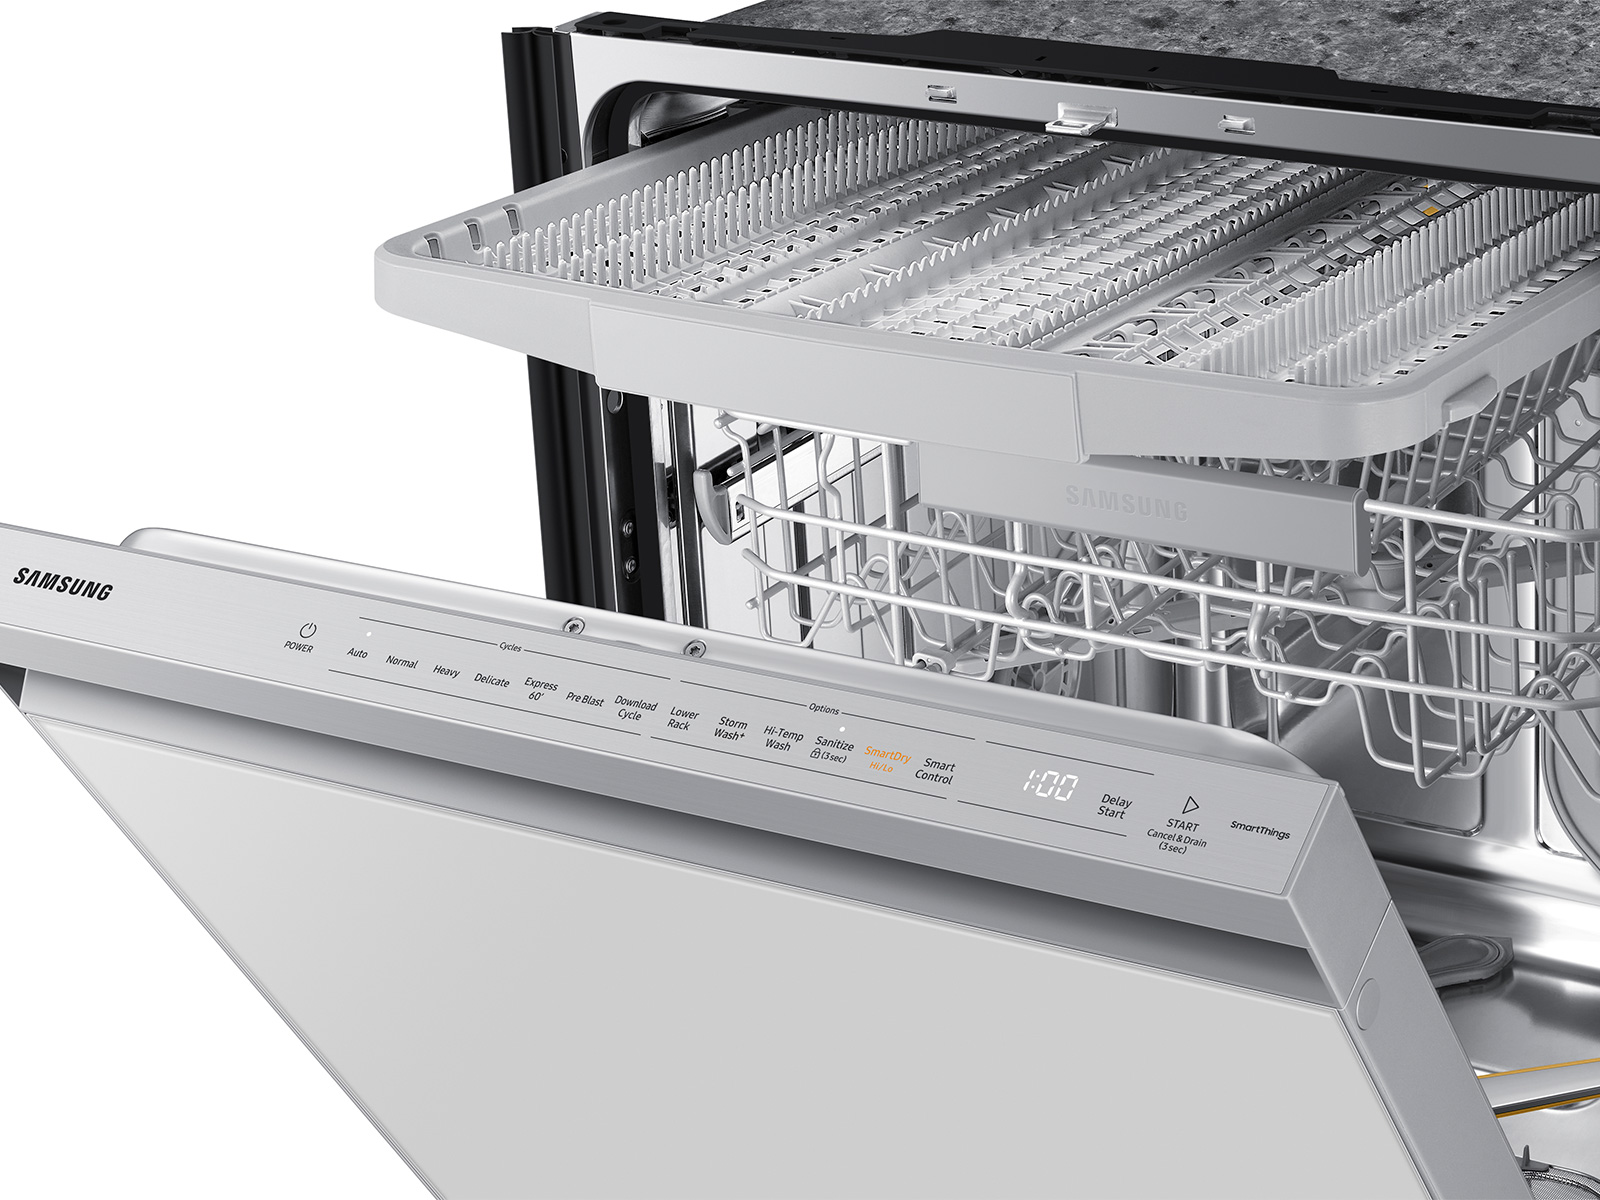 Review: Samsung's Bespoke Dishwasher - Dream Green DIY